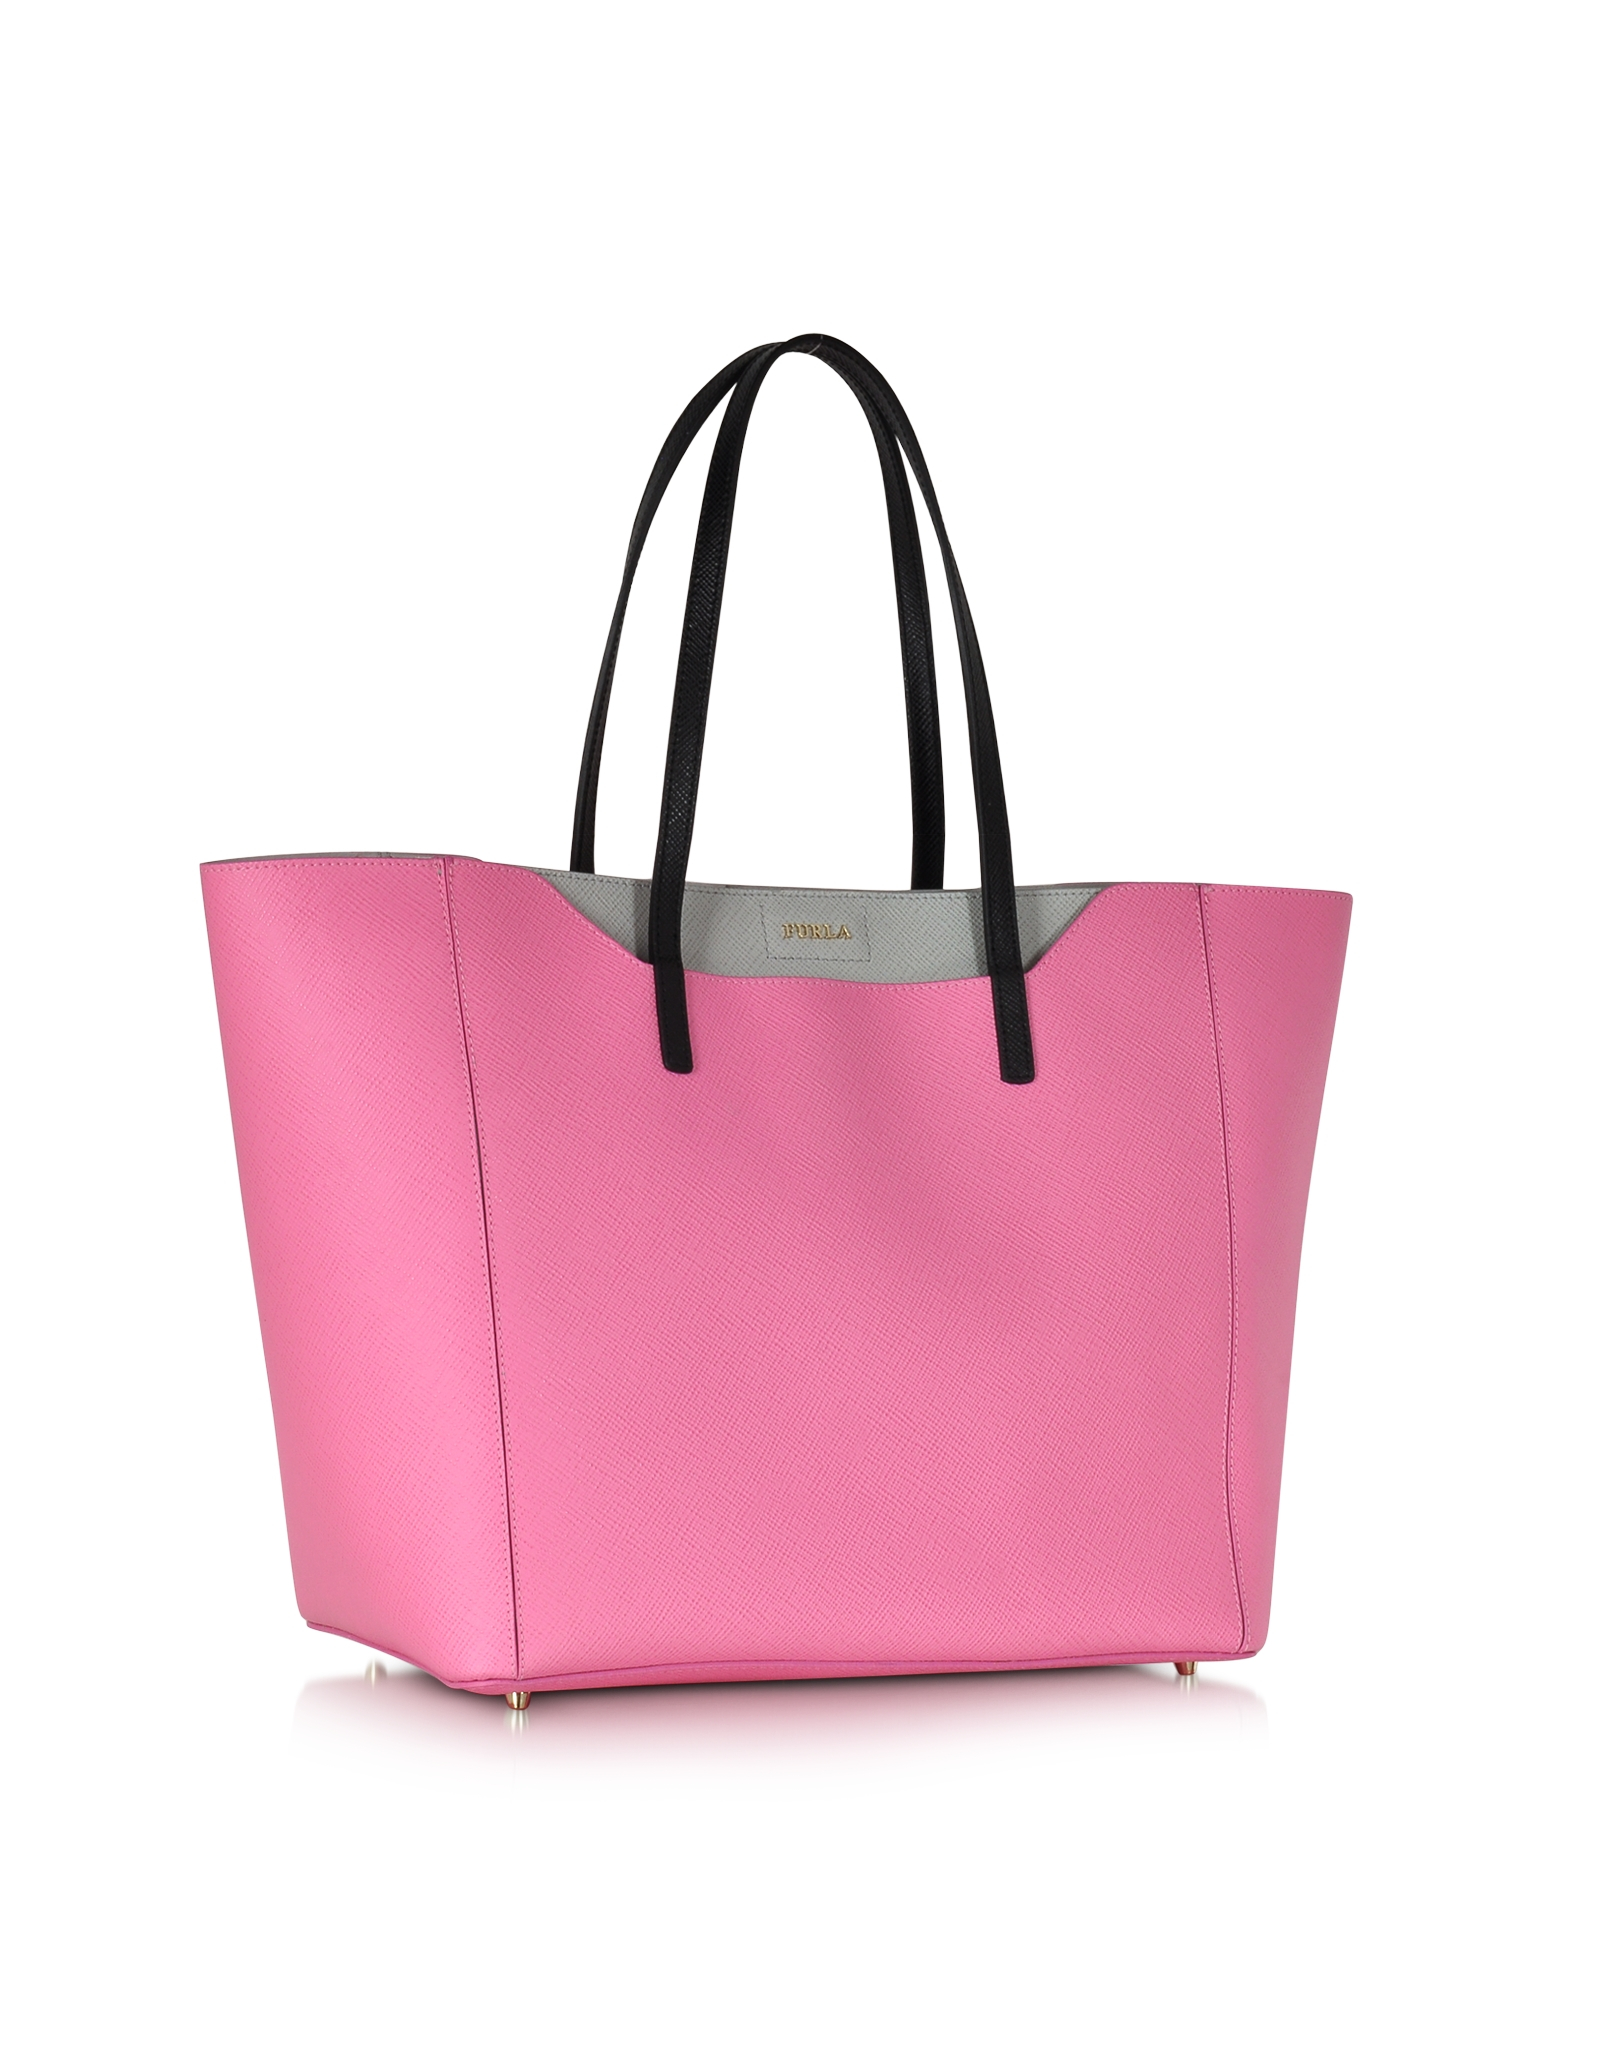 Furla Fantasia Pink & Gray Leather Tote Bag - Lyst